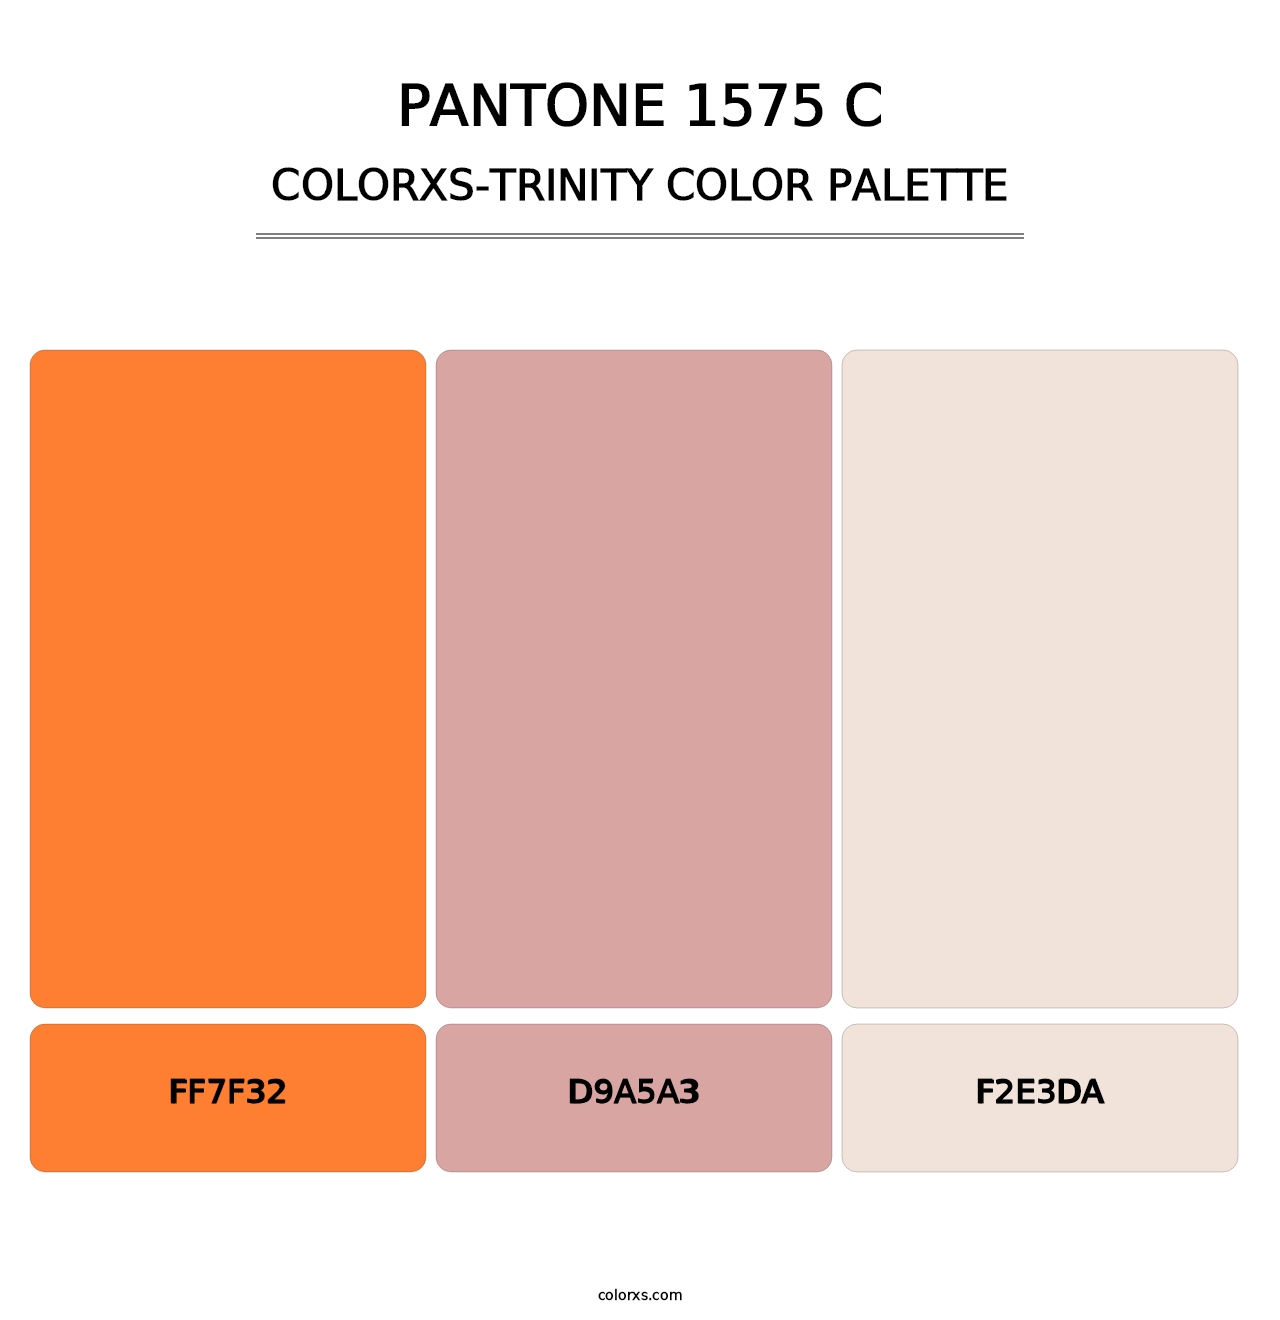 PANTONE 1575 C - Colorxs Trinity Palette